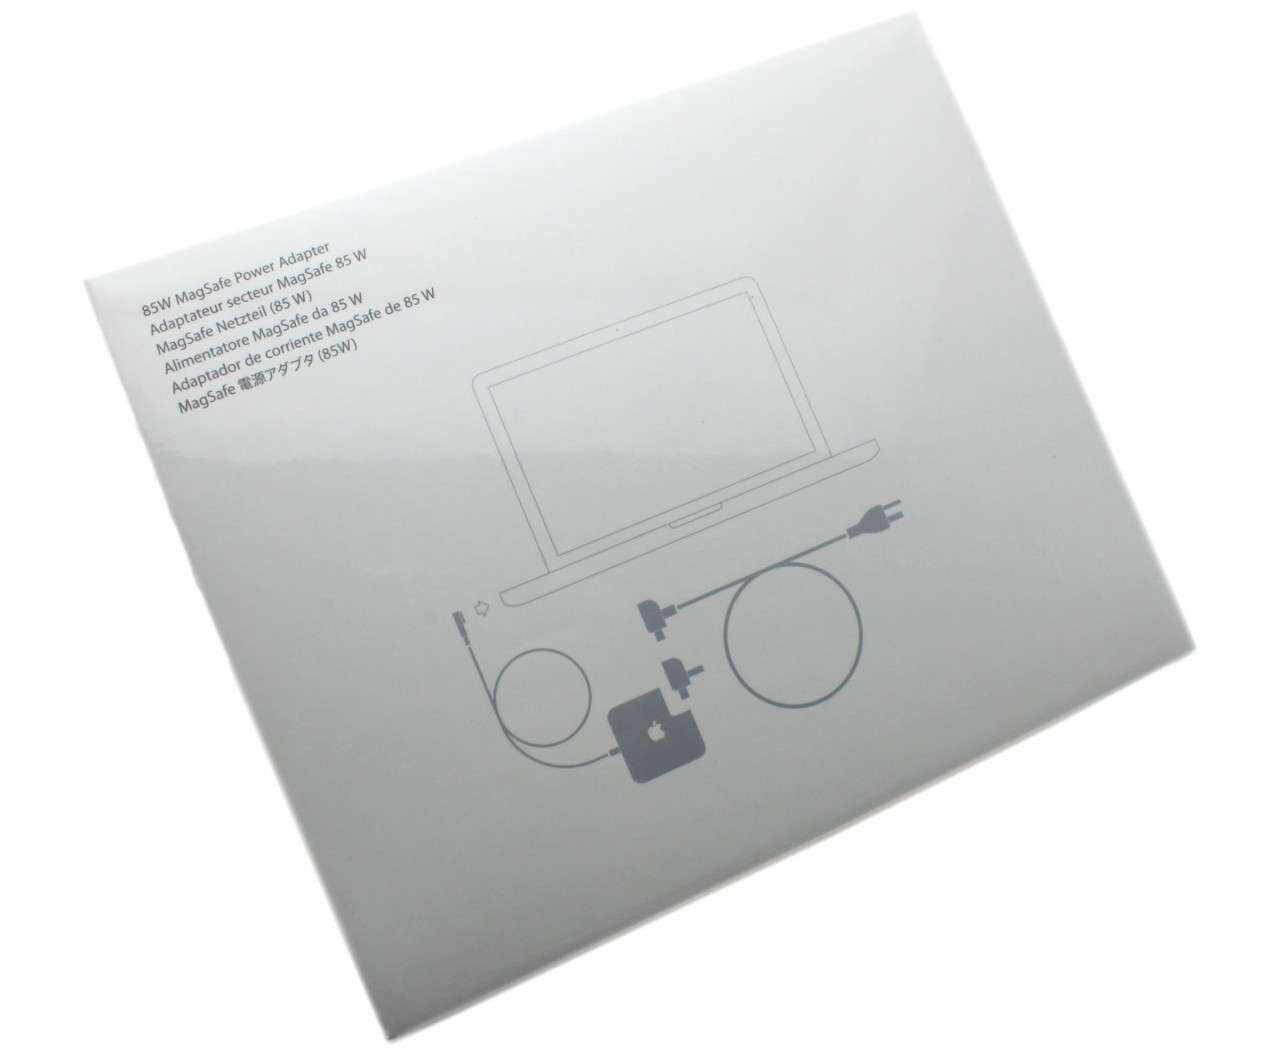 Incarcator Apple MacBook Pro Unibody 15 A1286 Early 2011 85W ORIGINAL